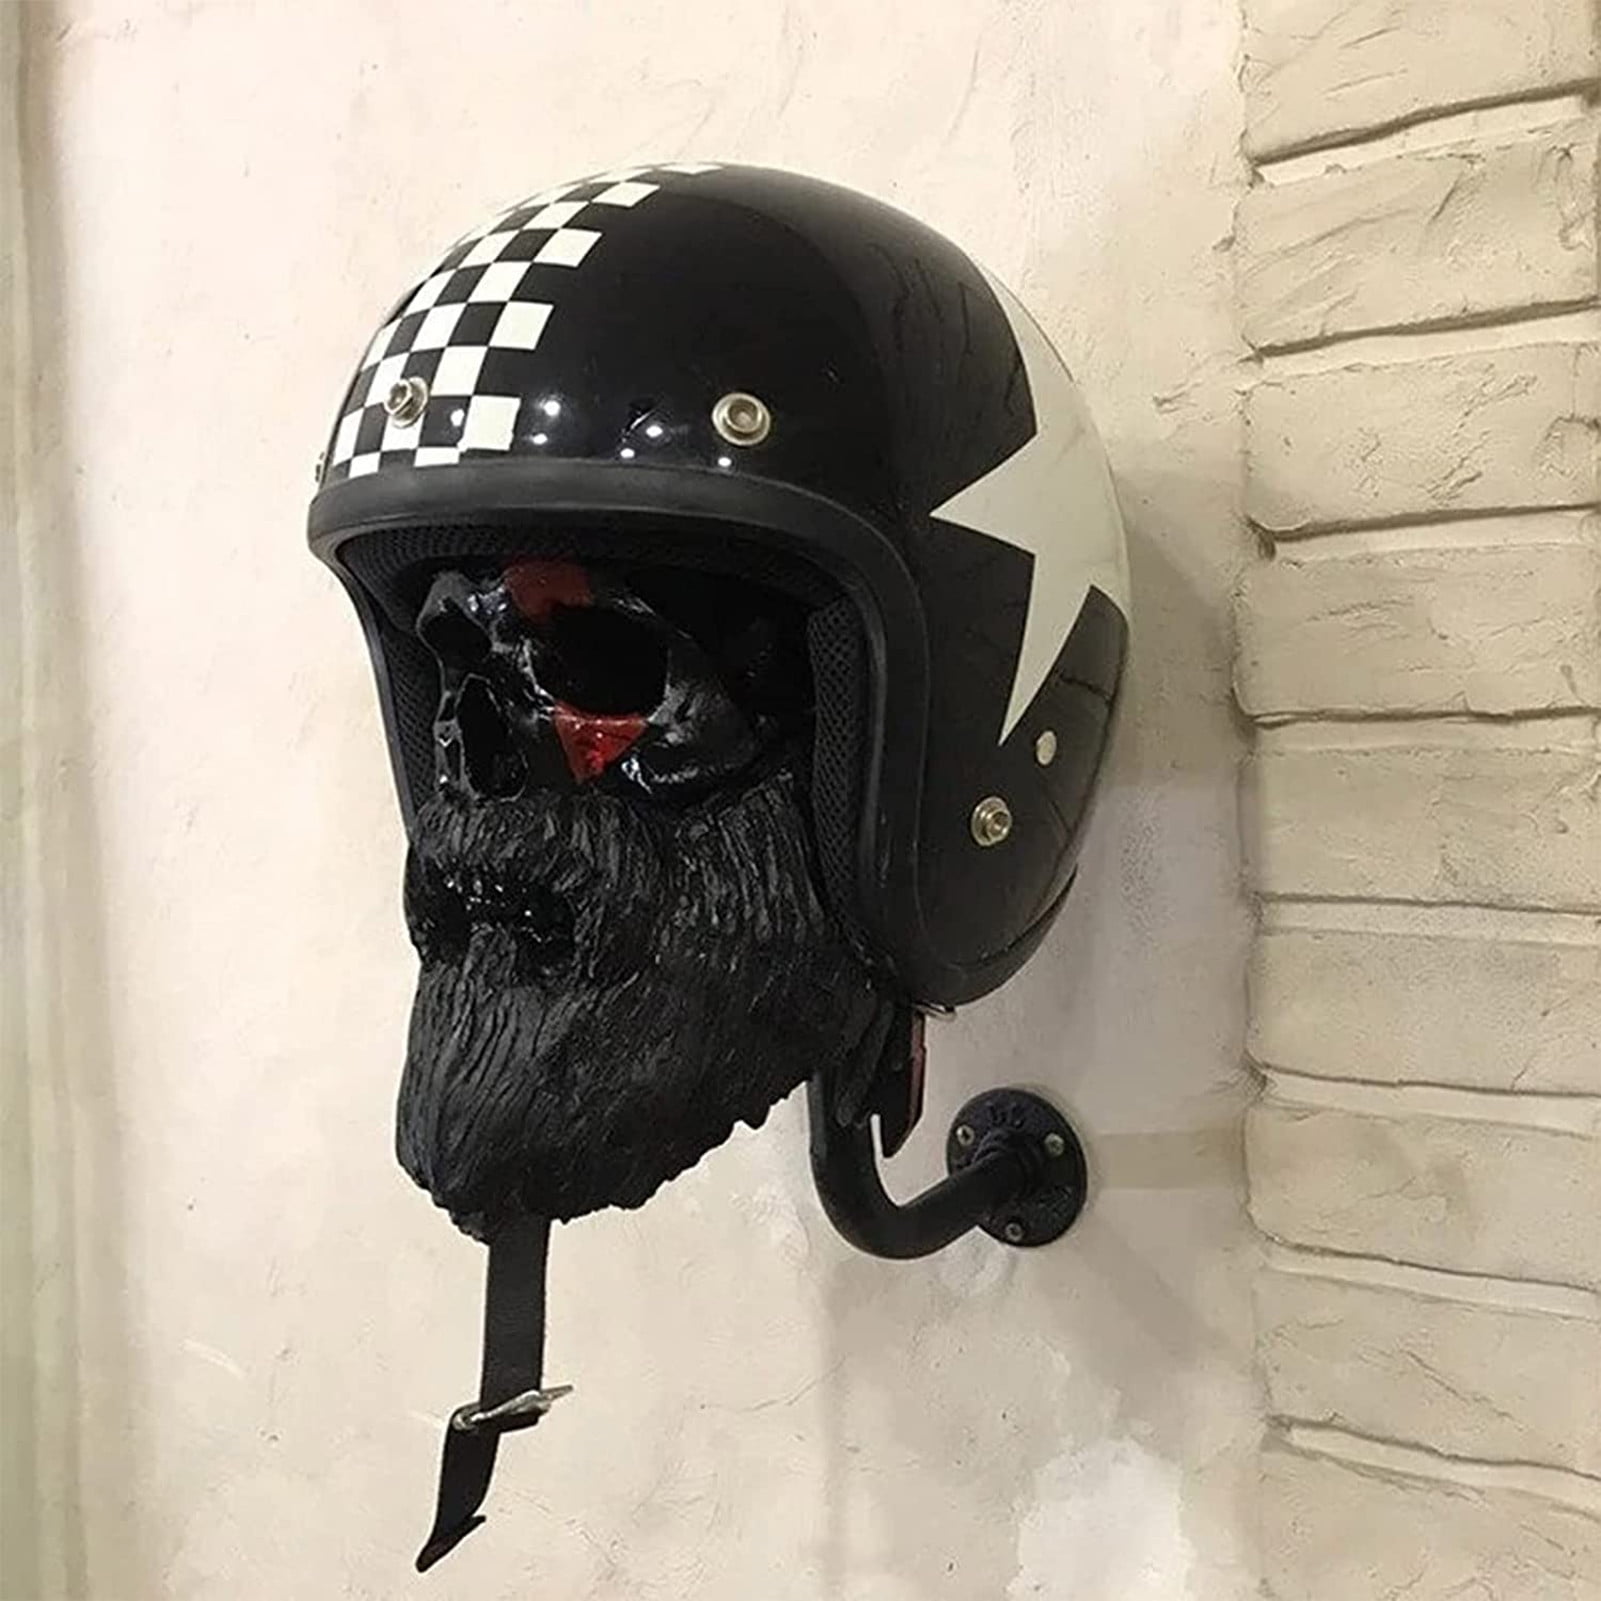 A Gift for Bikers Motorcycle Skull Helmet Holder Skull Helmet Wall Mount,multi-uses Hat Stand for Baseball Cap Bike Motorcycle Helmet Holder Baseballs and Rugby Helmet